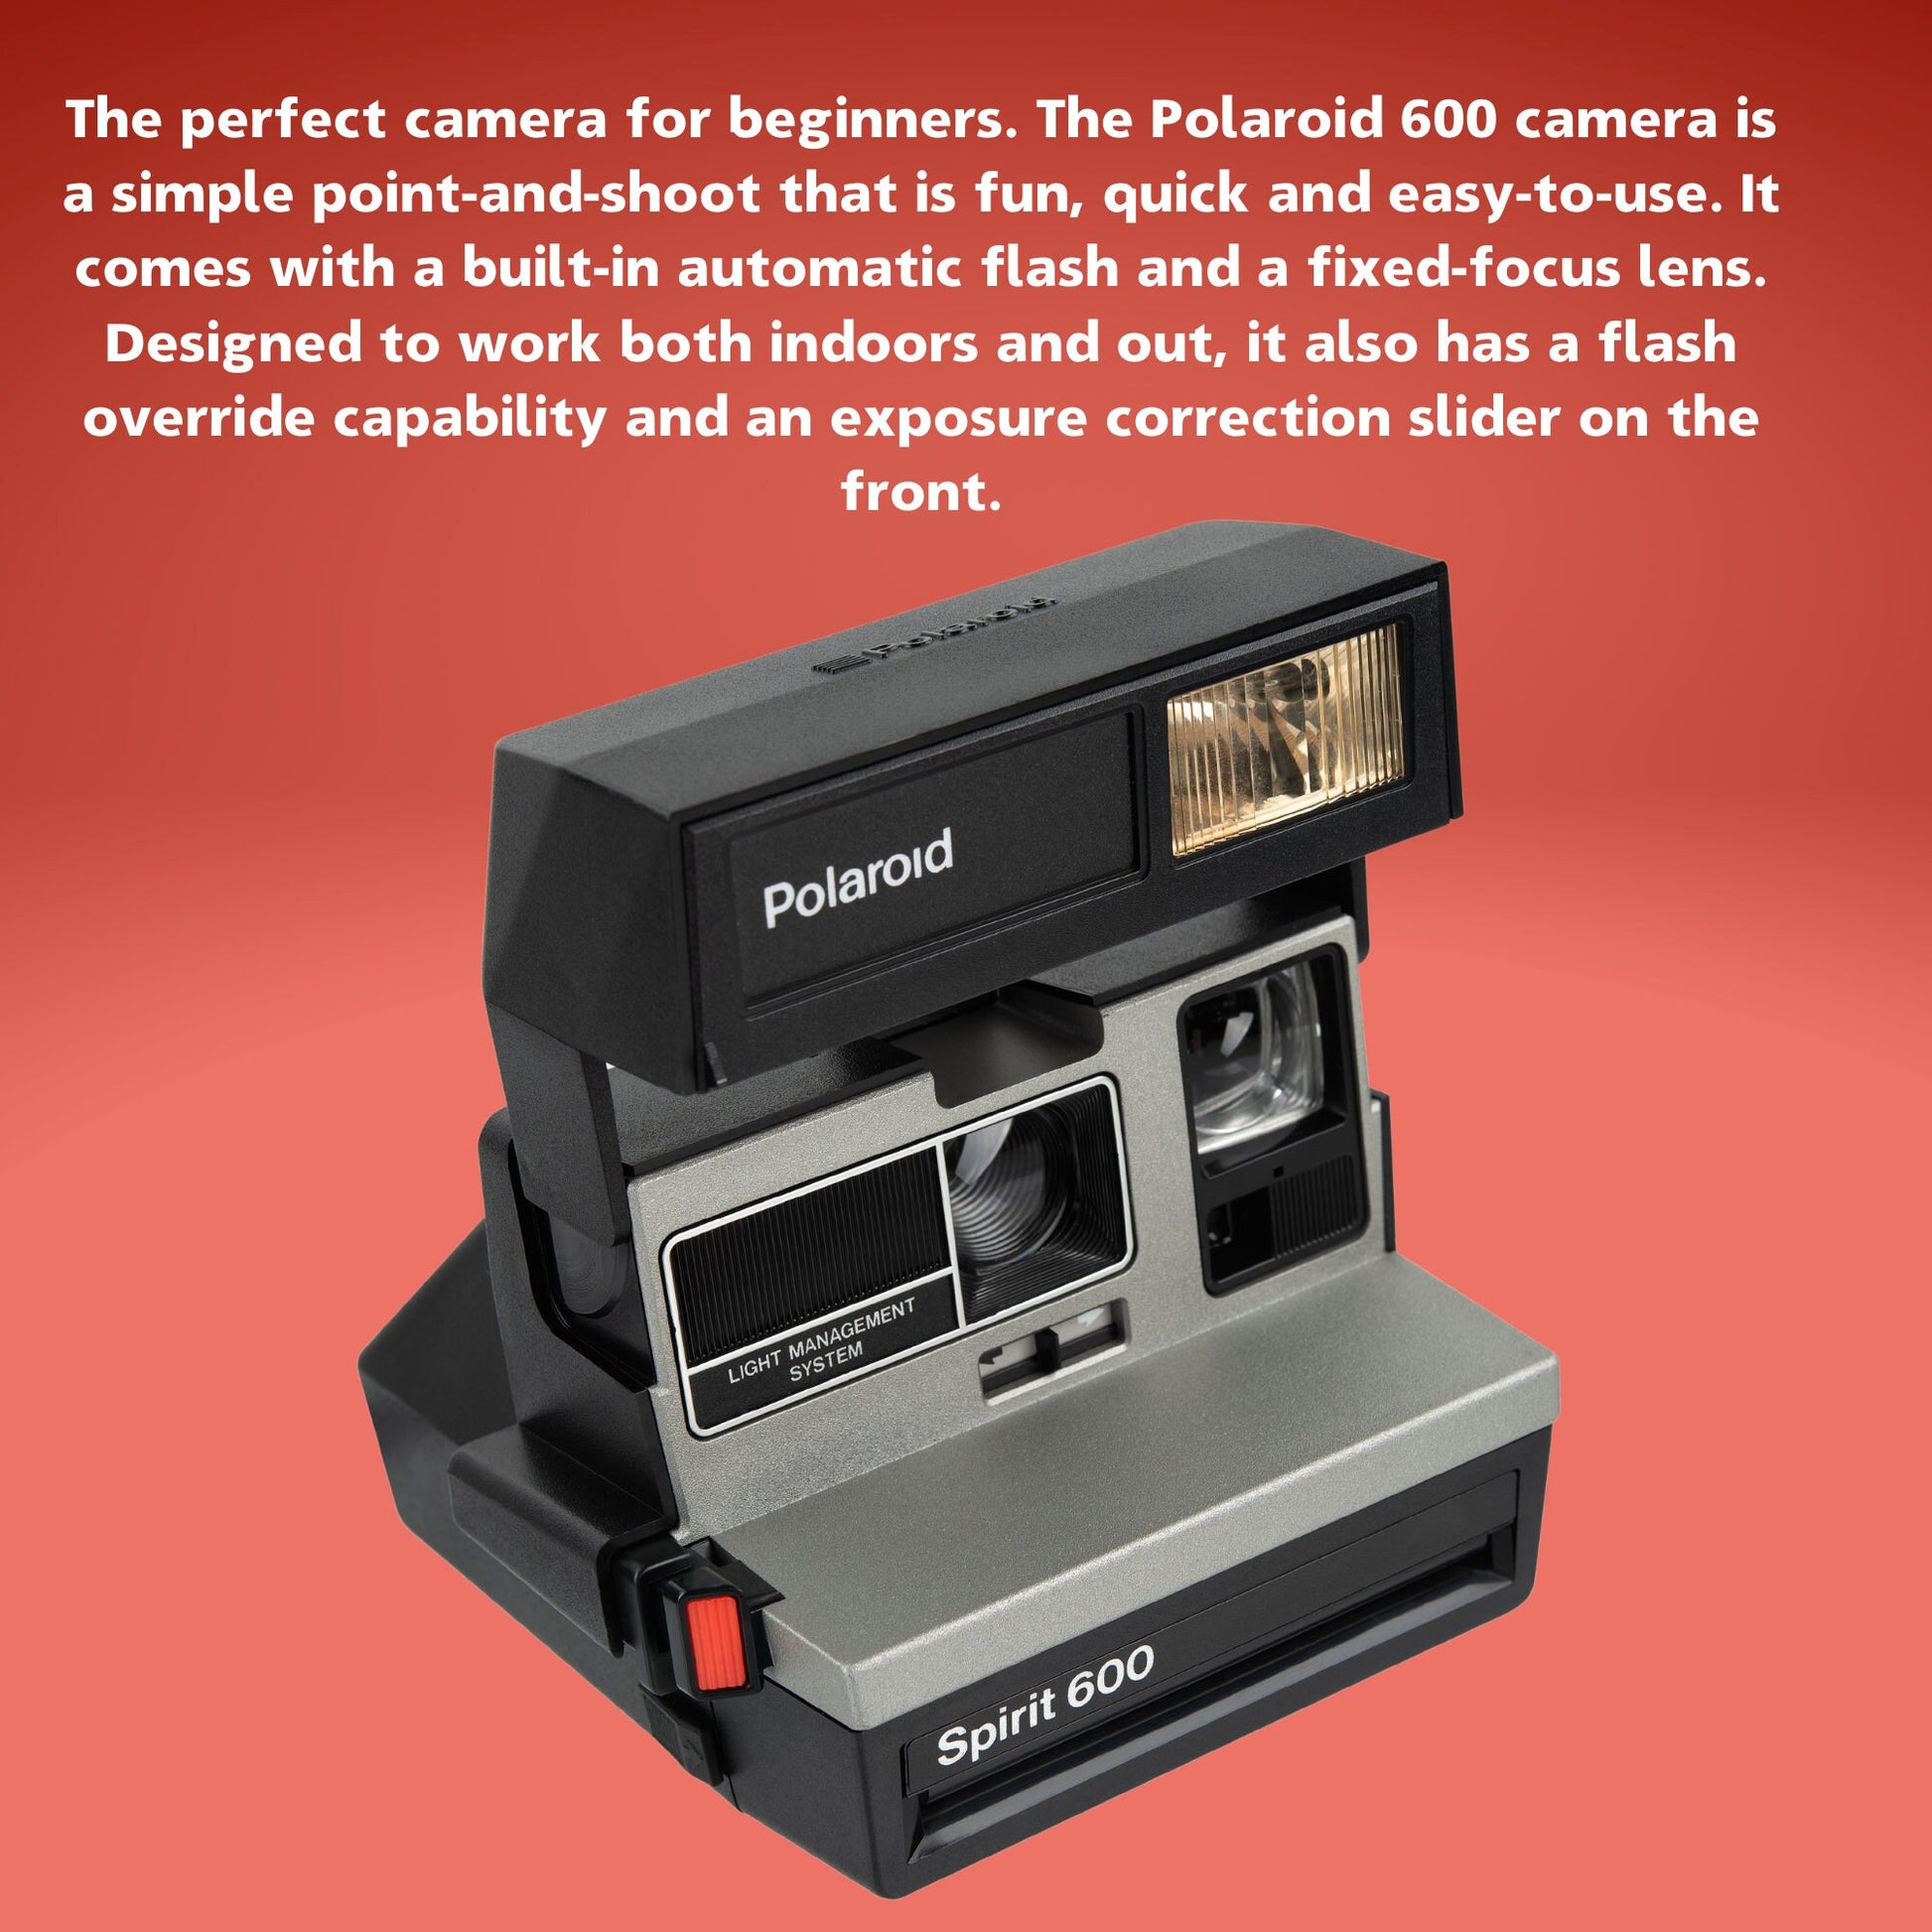 Vintage Polaroid Spirit 600, Silver Old Instant Camera, Polaroid Spirit Camera - Vintage Polaroid Instant Cameras